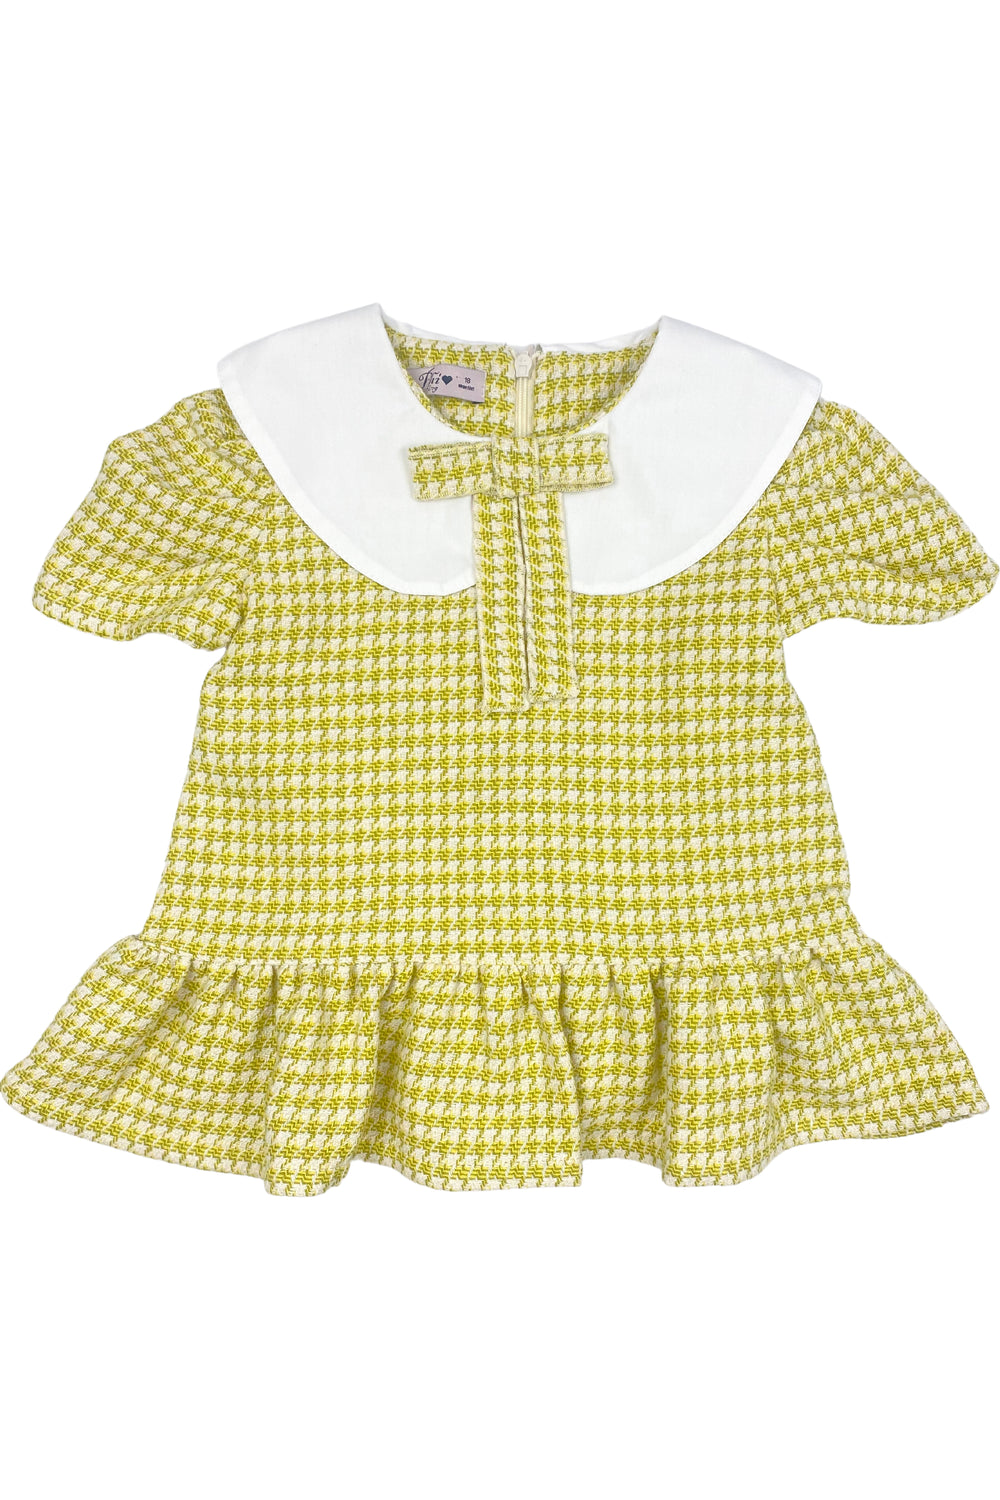 Phi "Blair" Green & Yellow Houndstooth Dress | Millie and John